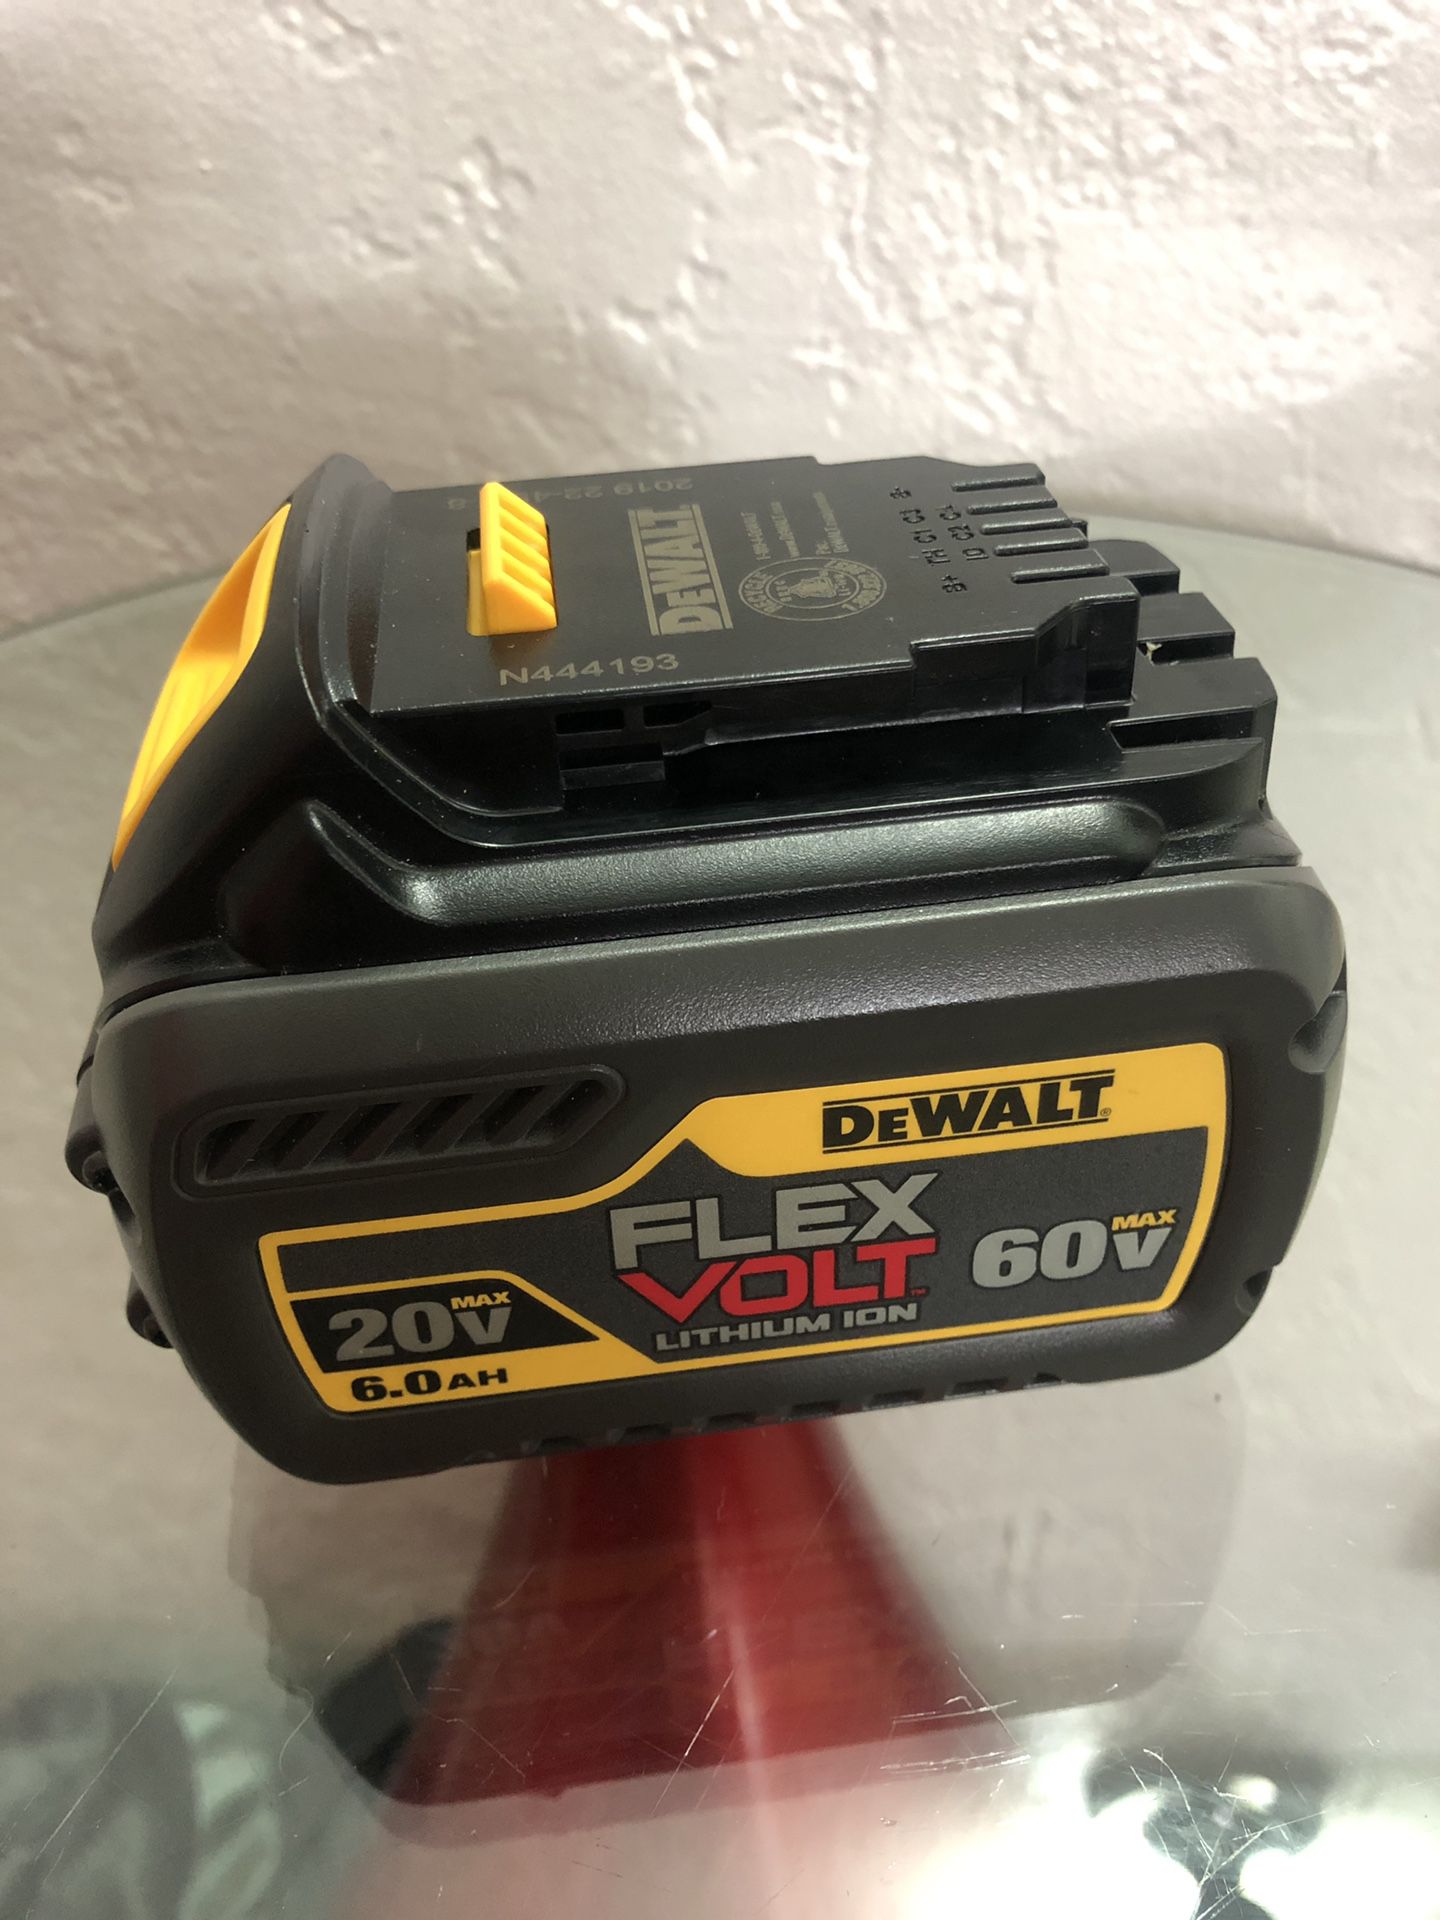 Brand New DeWalt 6AH Flexbolt Battery